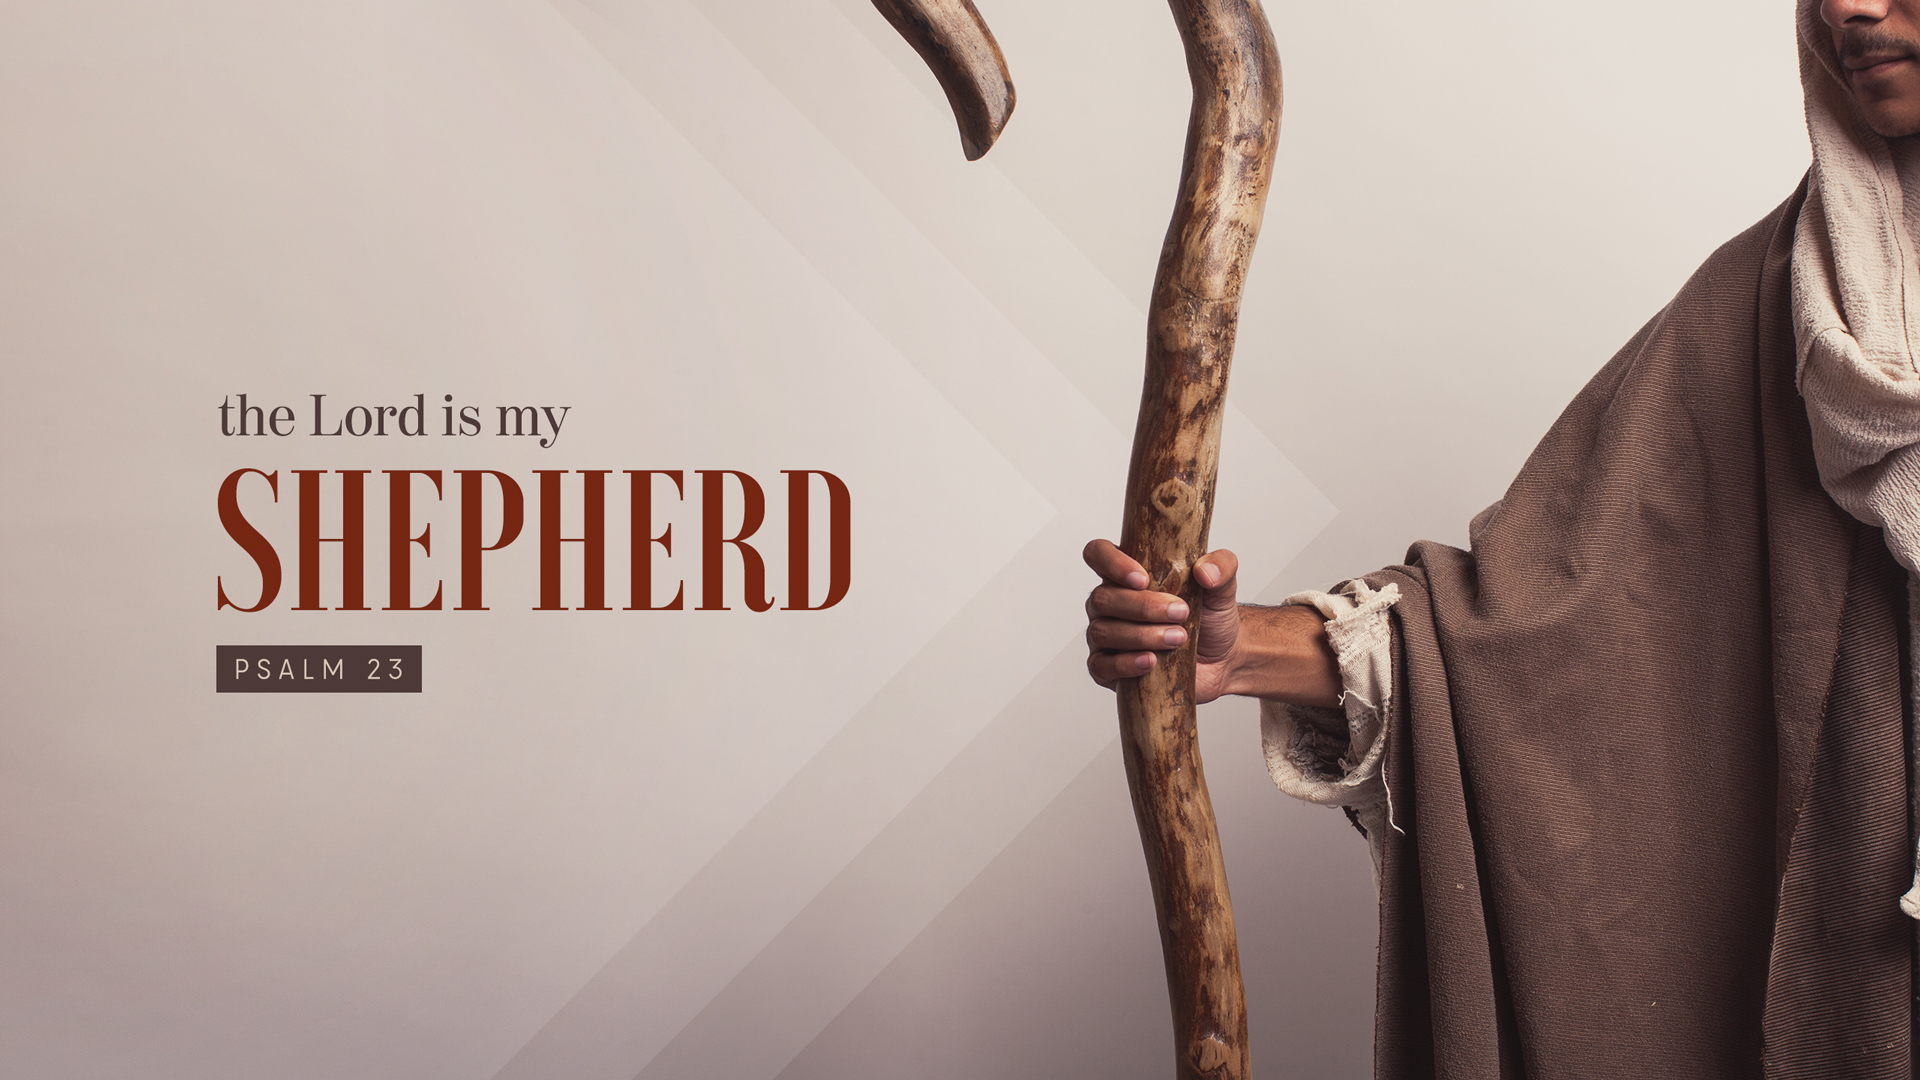 Wallpaper: The Lord is My Shepherd